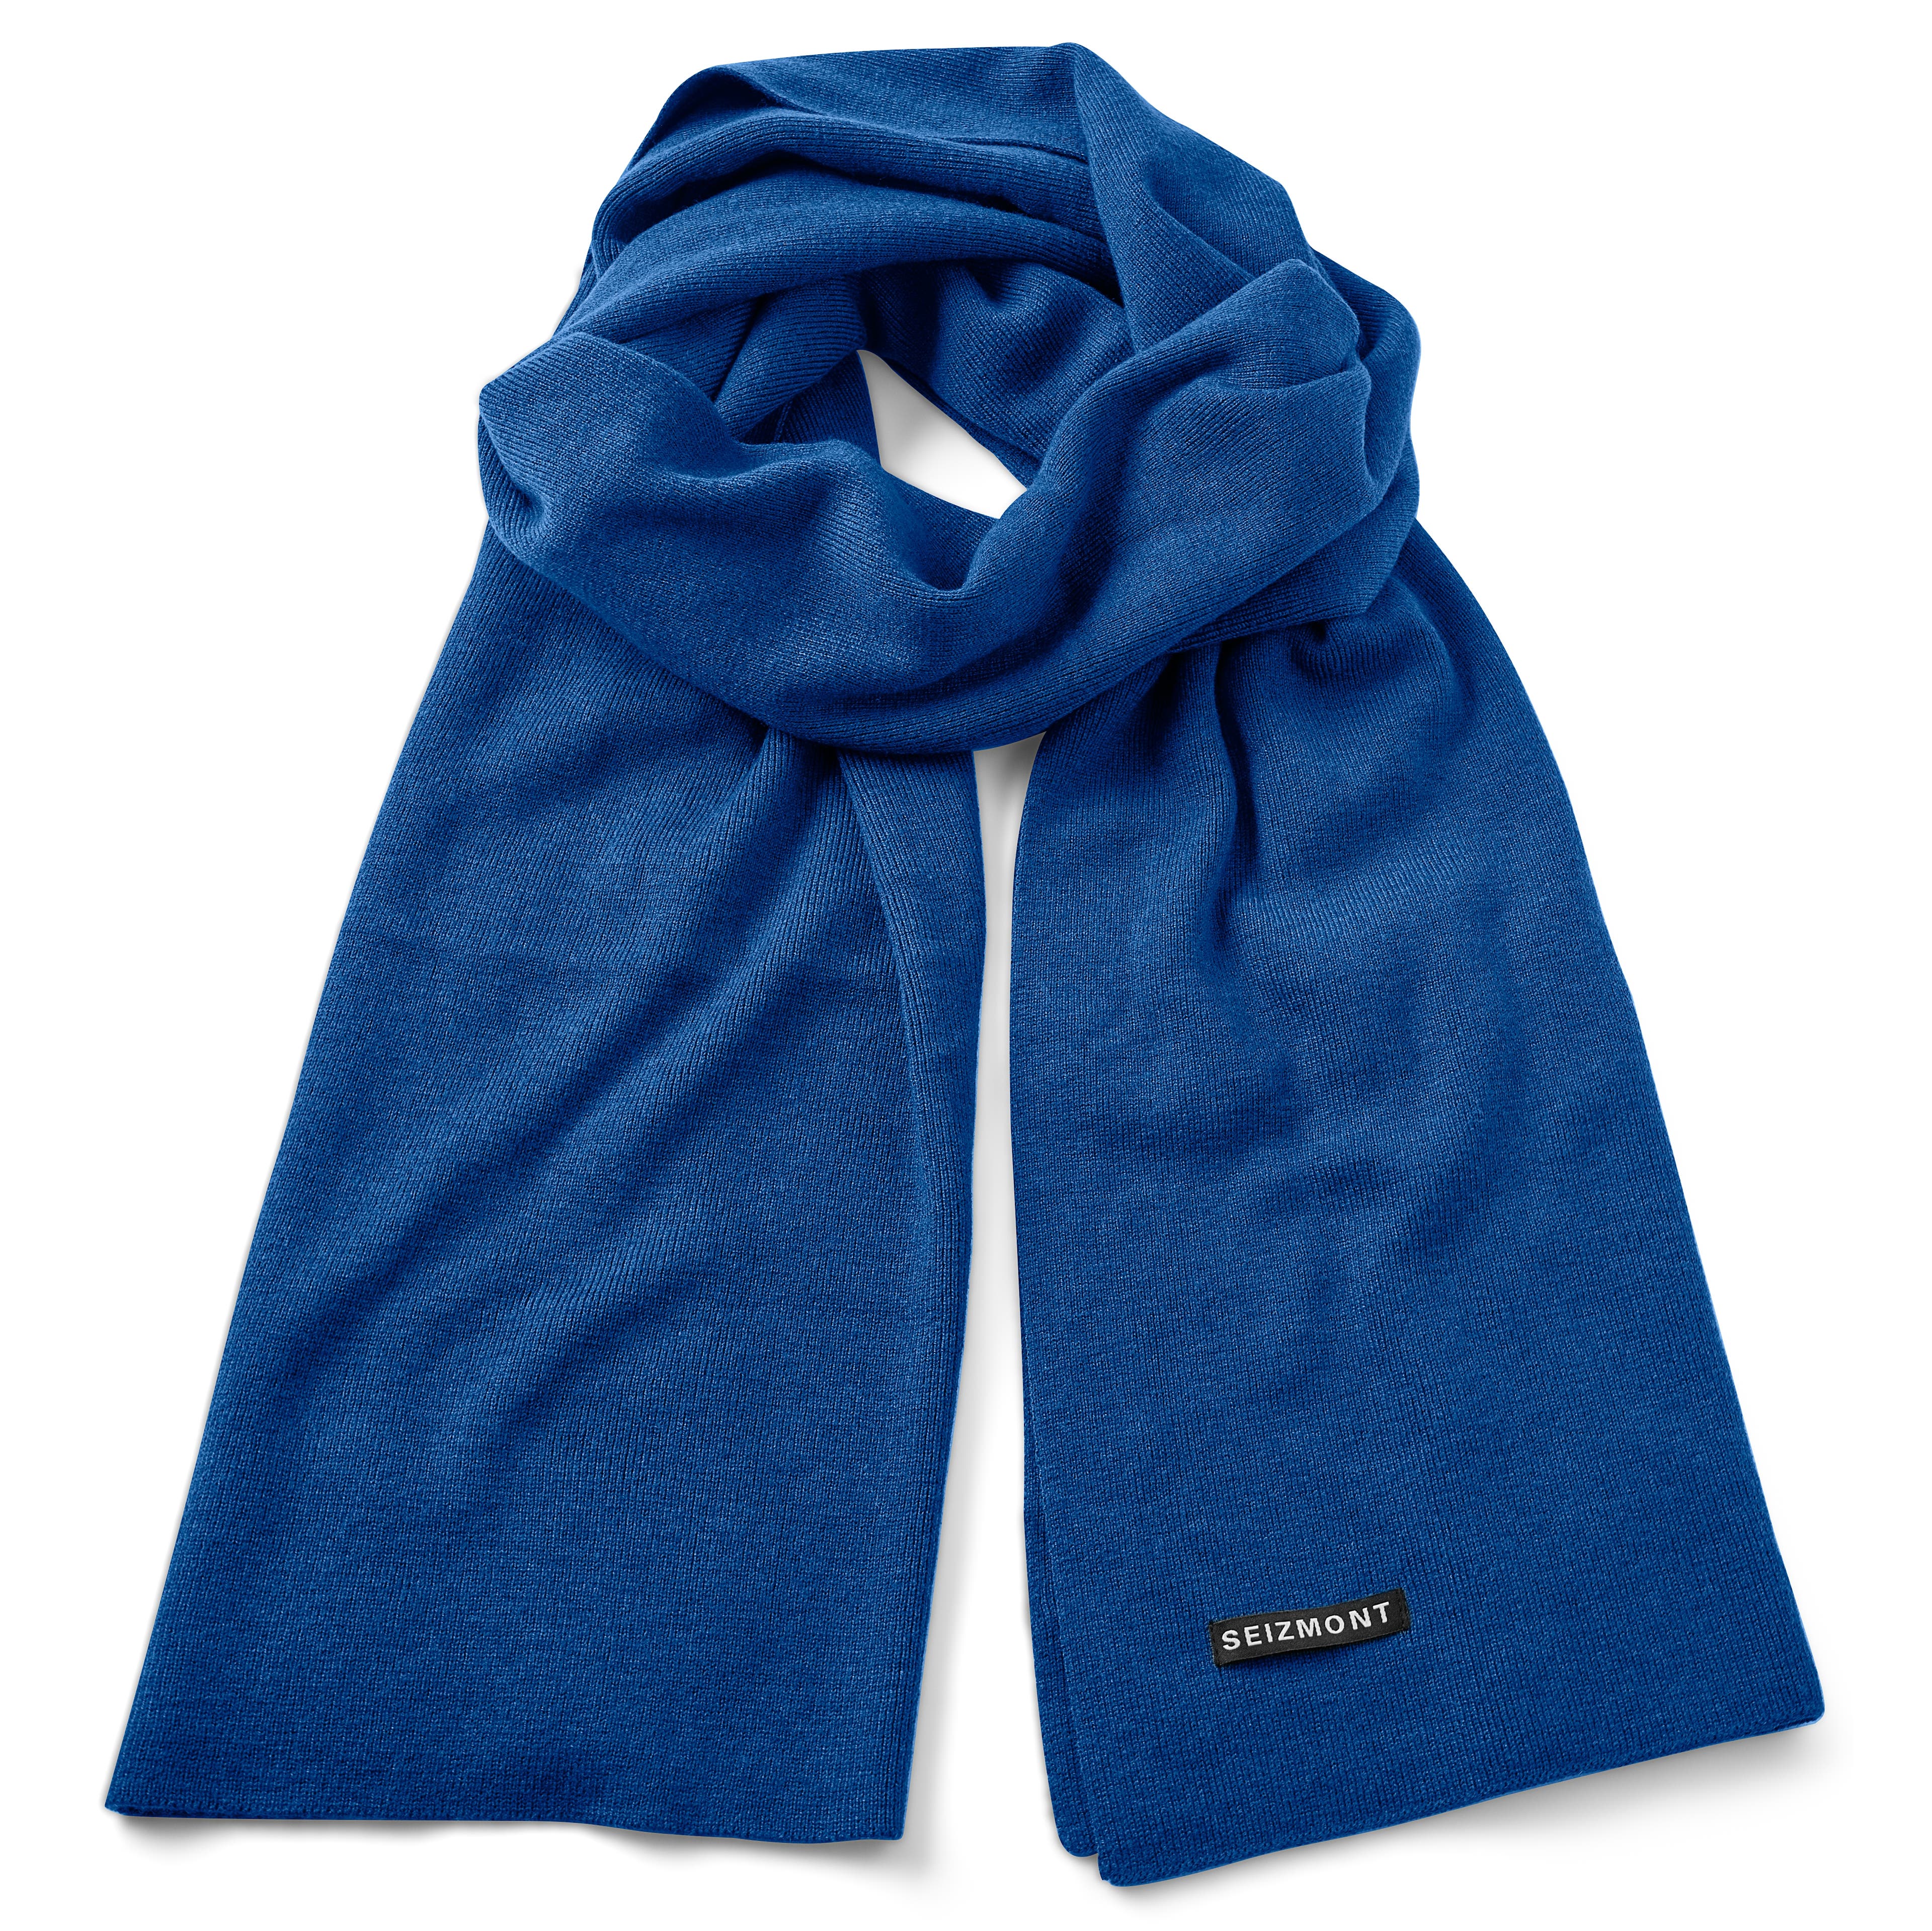 Hiems | Bufanda de mezcla de lana azul